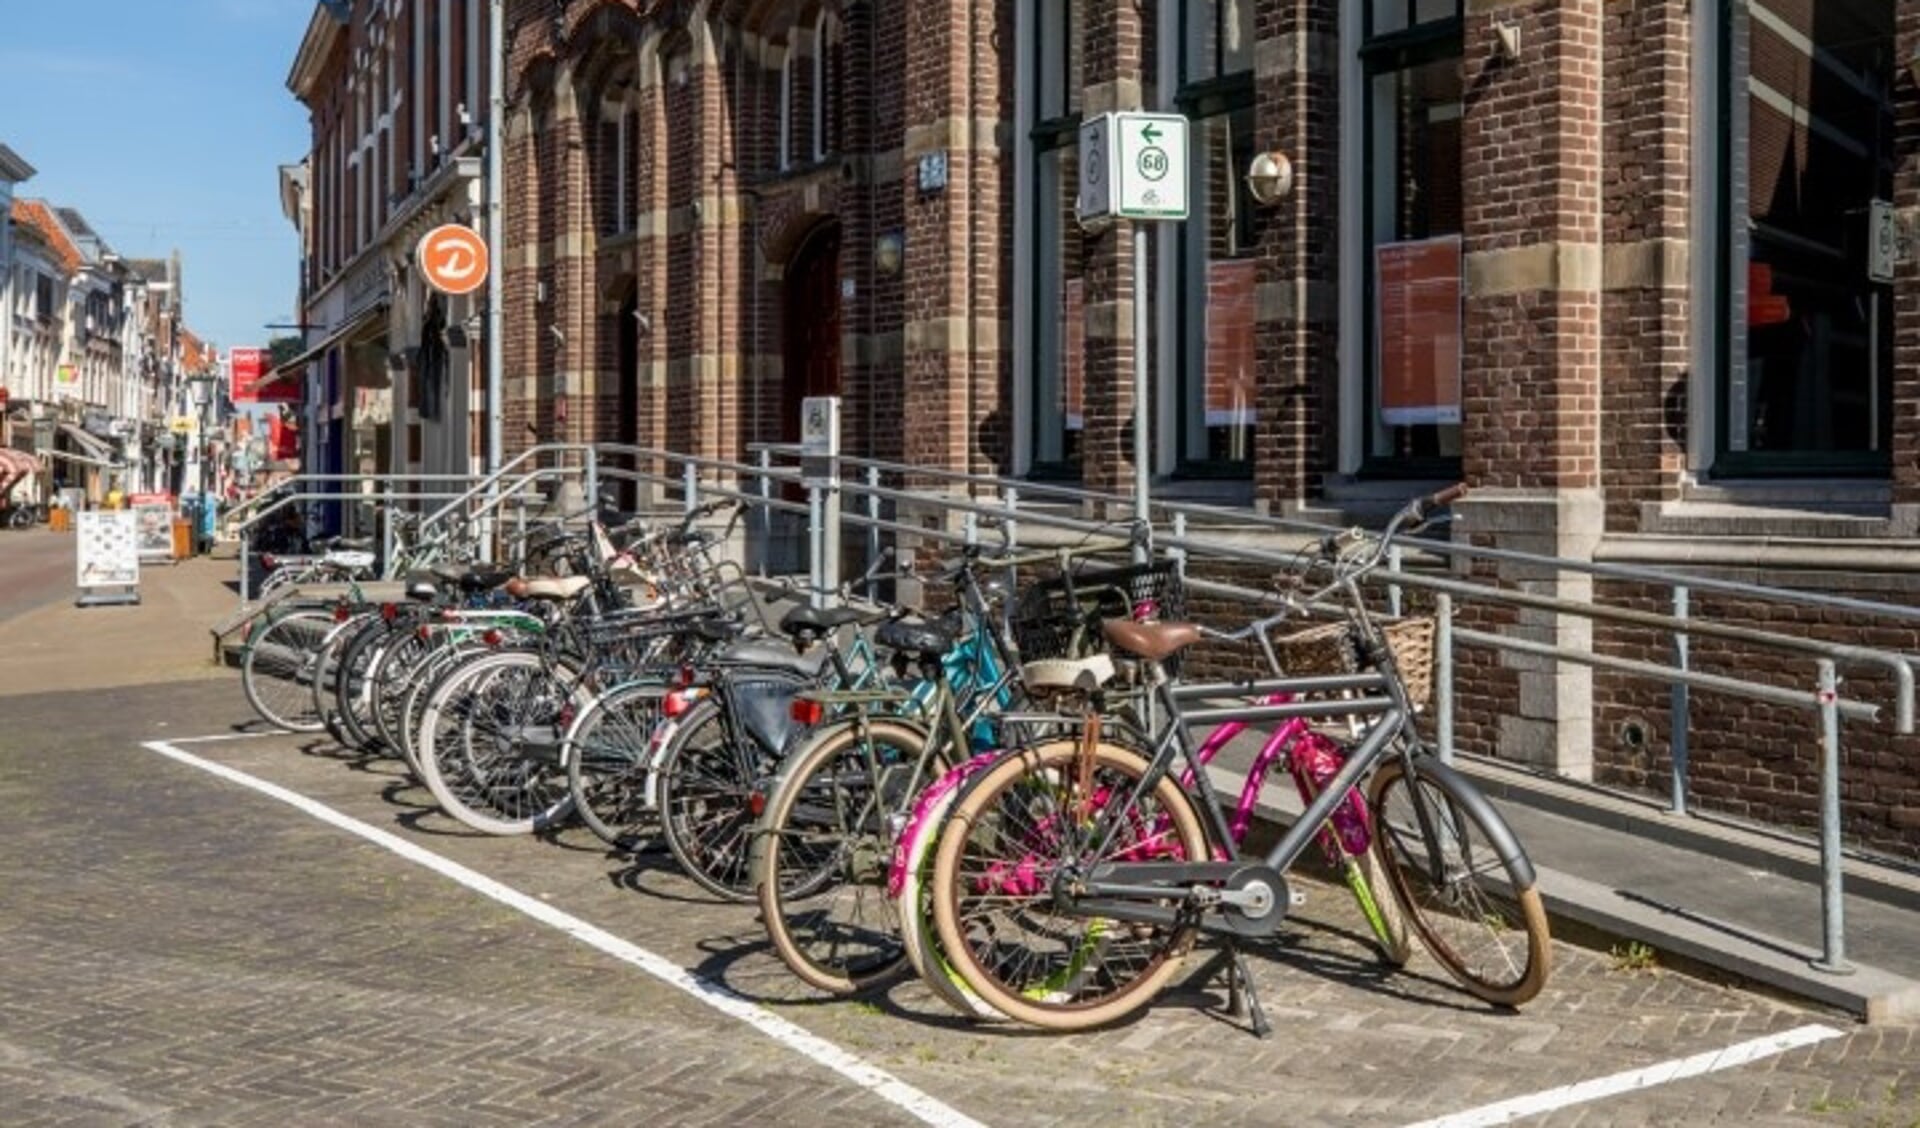  Fietsparkeerplekken in binnenstad Kampen